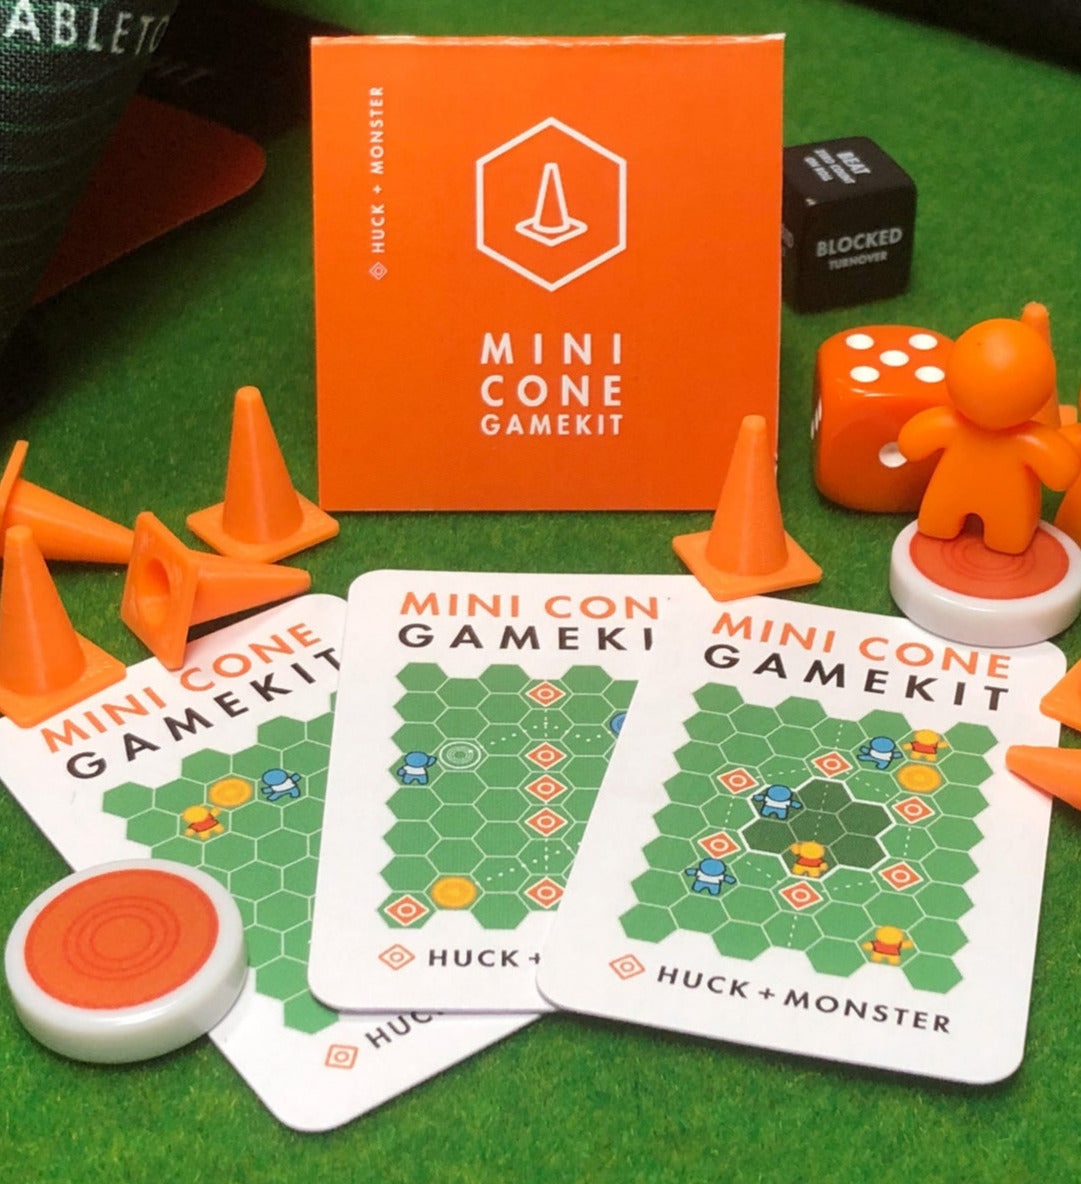 Mini Cone Gamekit